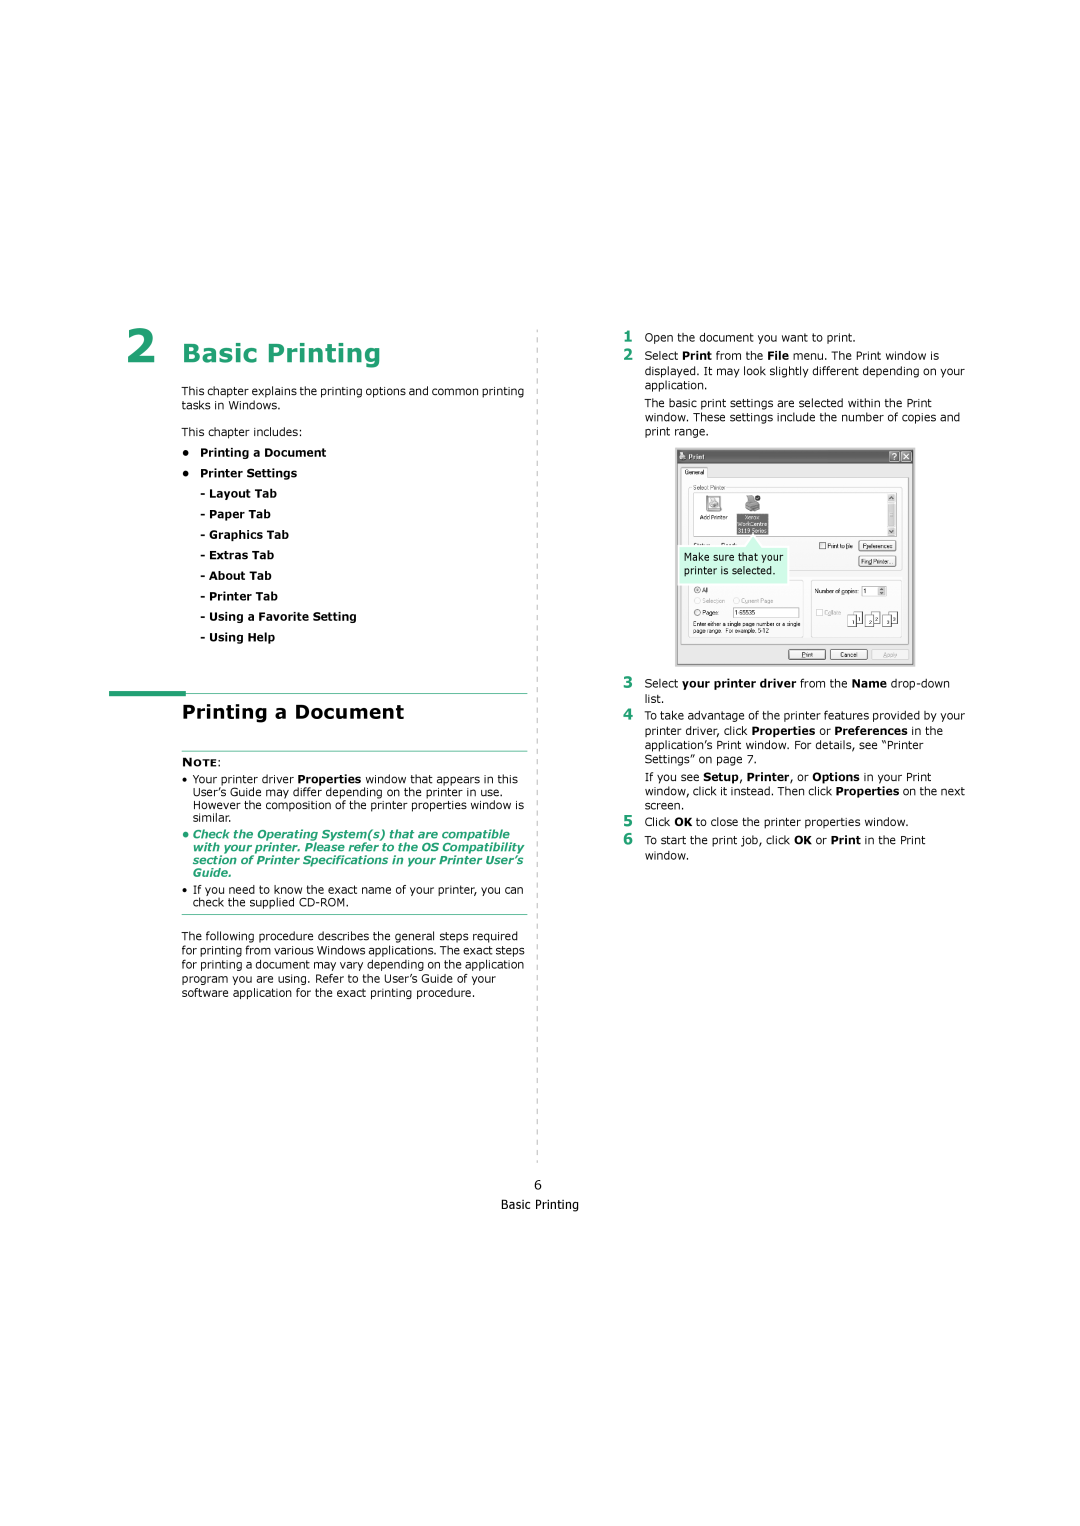 Xerox 3119 manual Basic Printing, 1 2 3 4 5 6, •Printing a Document •Printer Settings Layout Tab 